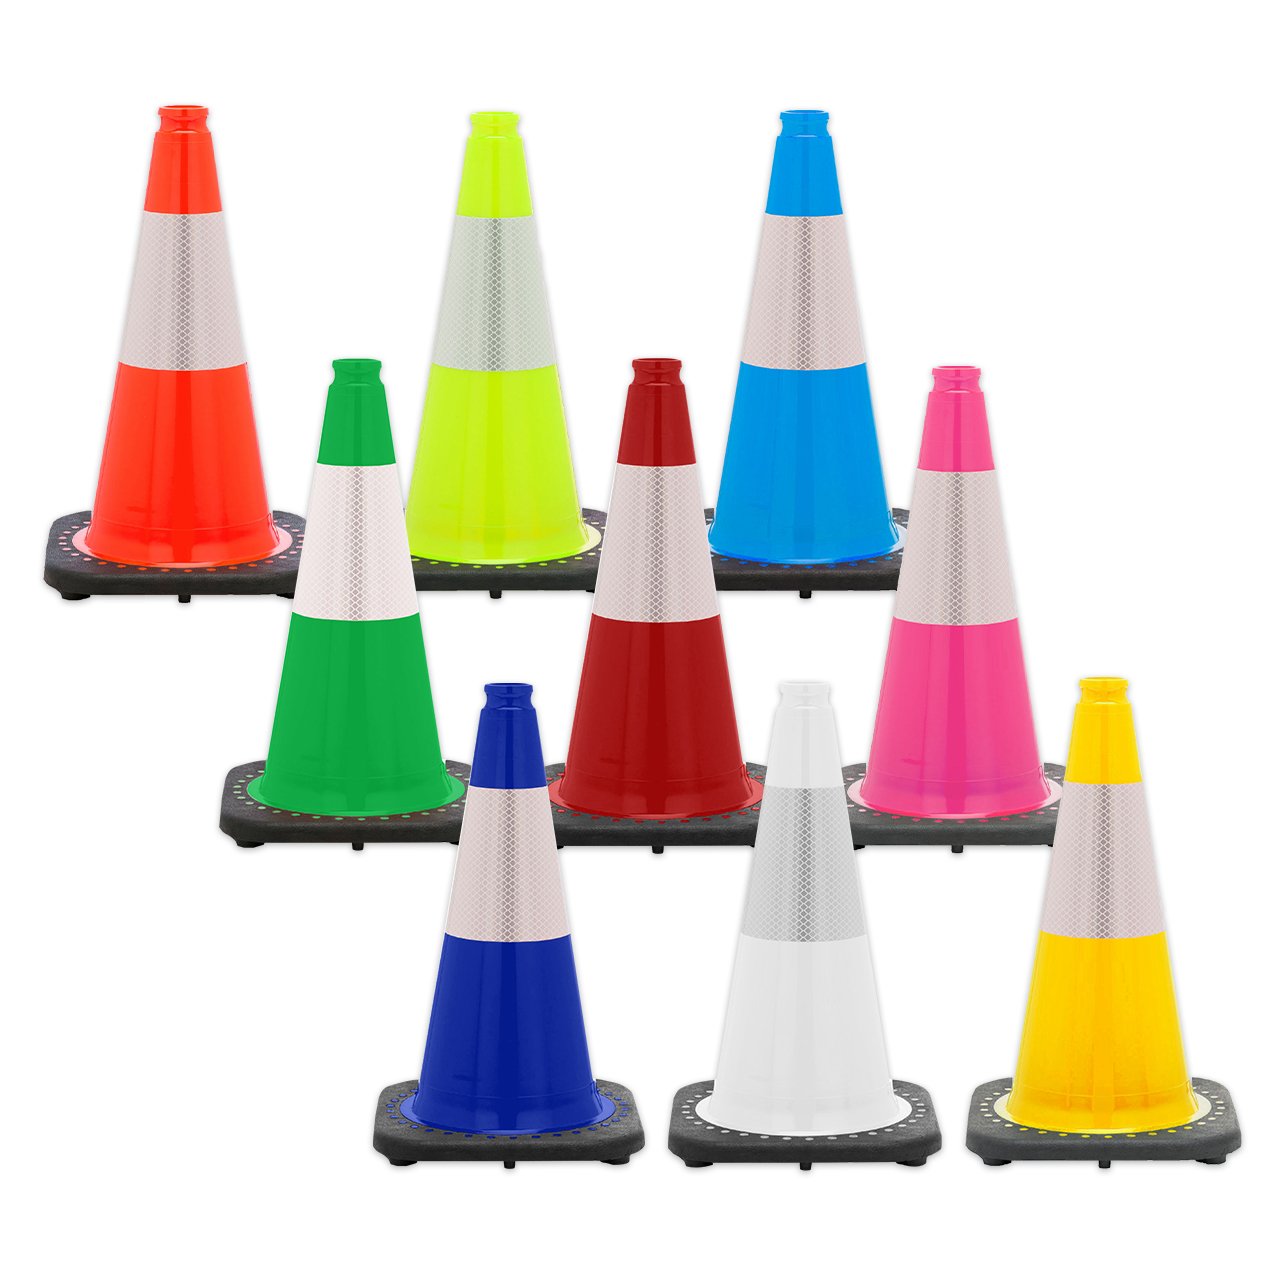 18 Traffic Safety Cone w/Black Base, 3lbs & 6 Reflective Collar